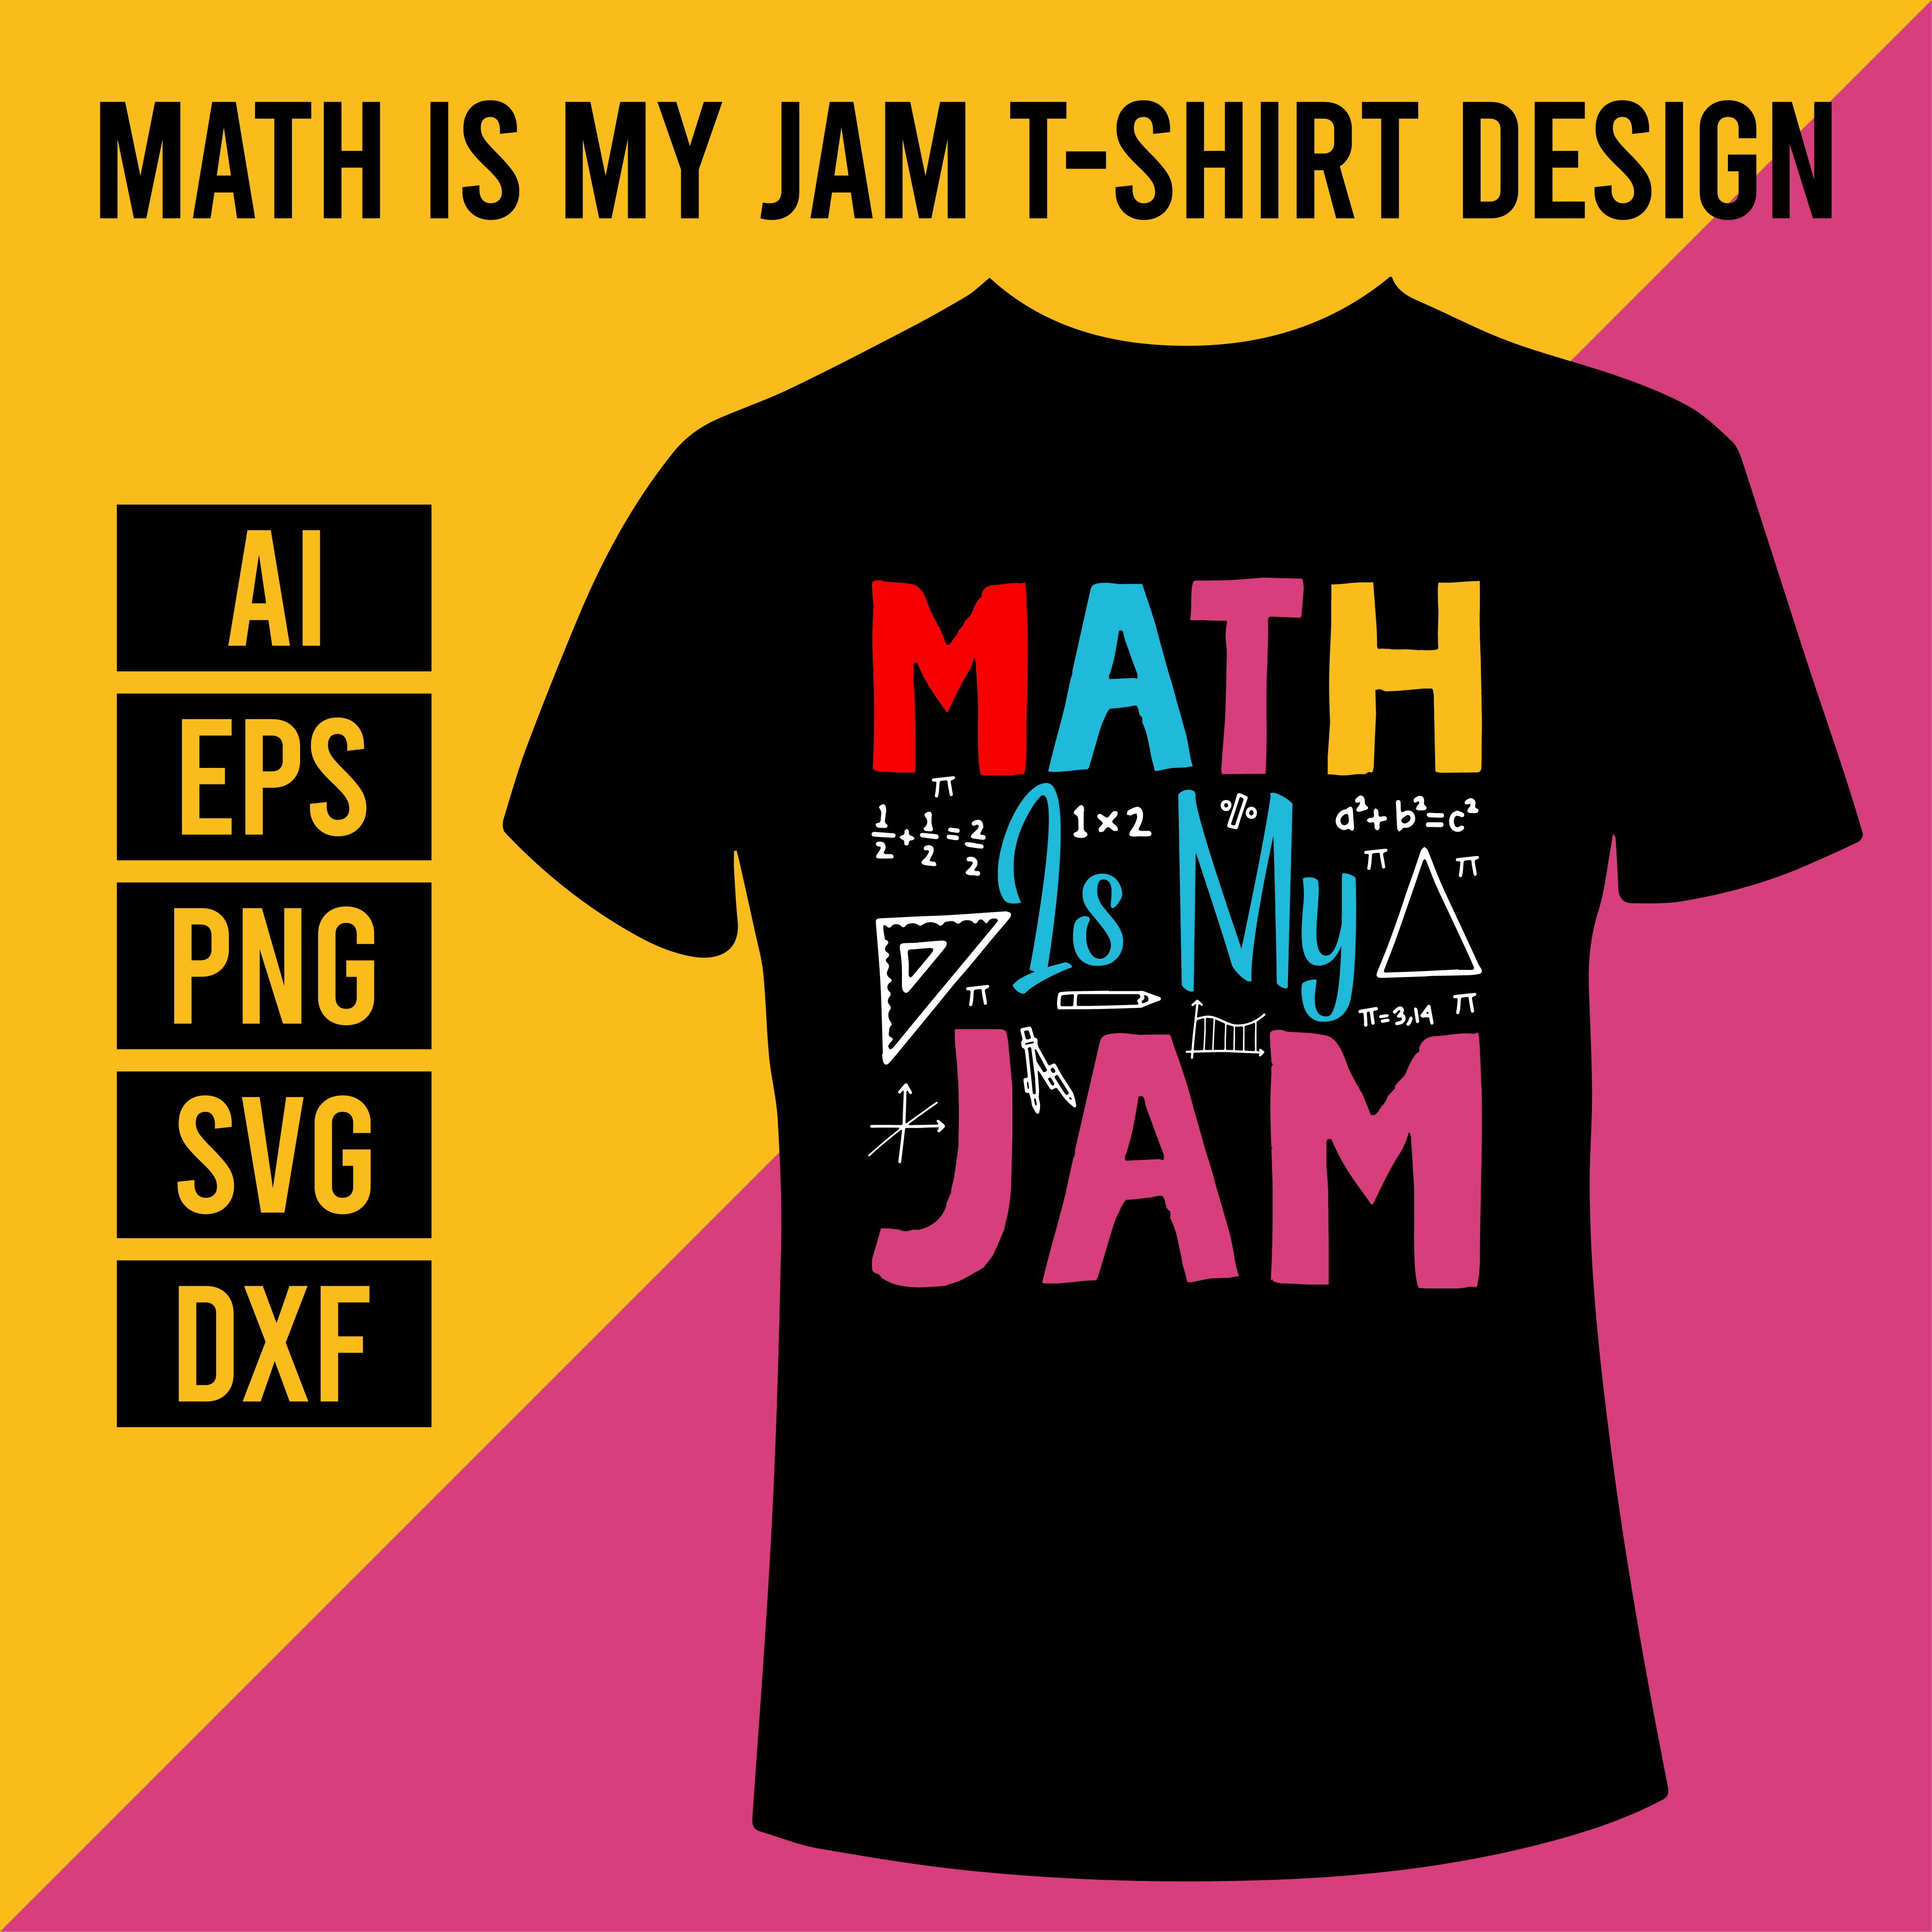 Math is My Jam T-Shirt Design main cover.